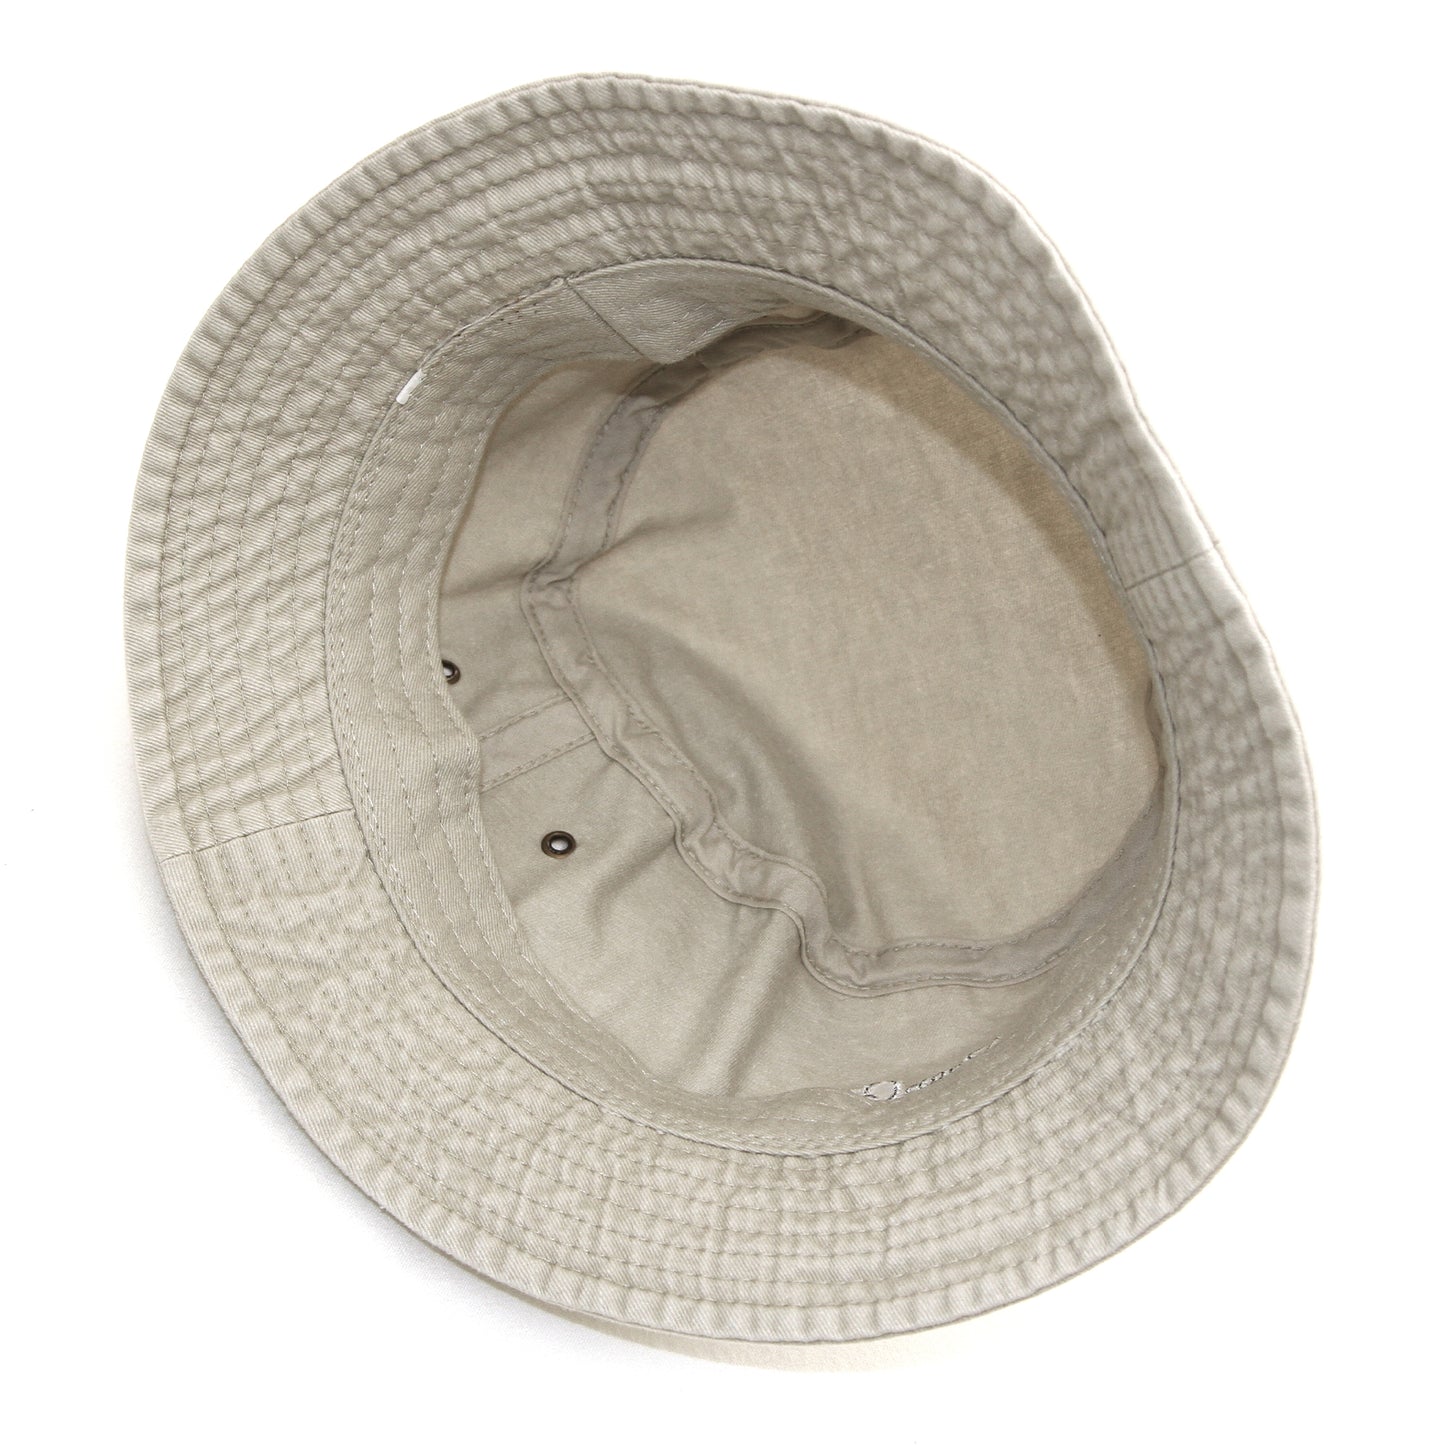 PEEP GAME - Bucket Hat/White